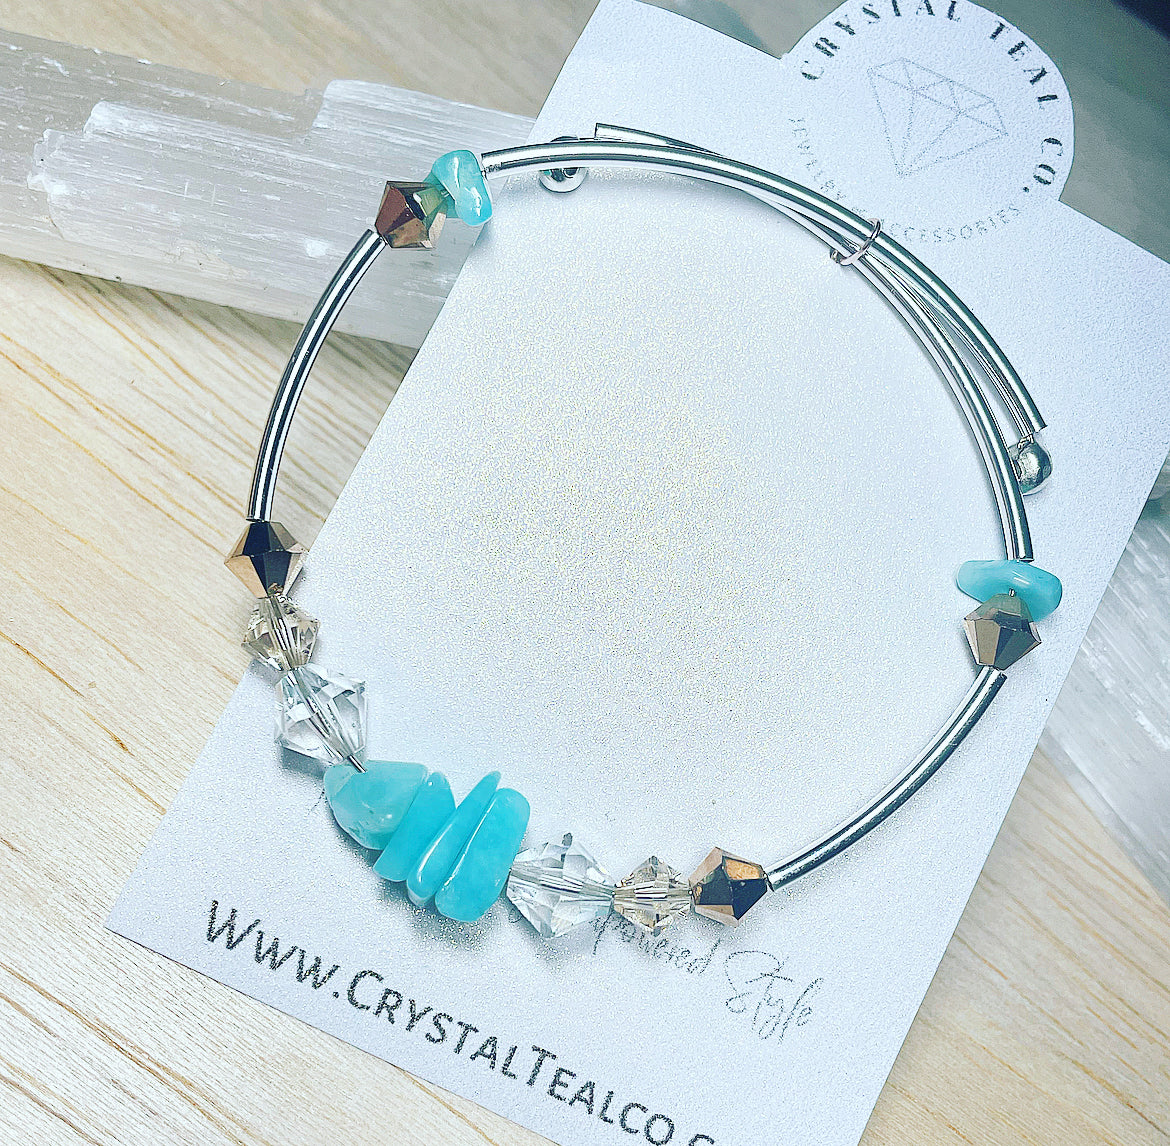 Turquoise Crystal Bracelet